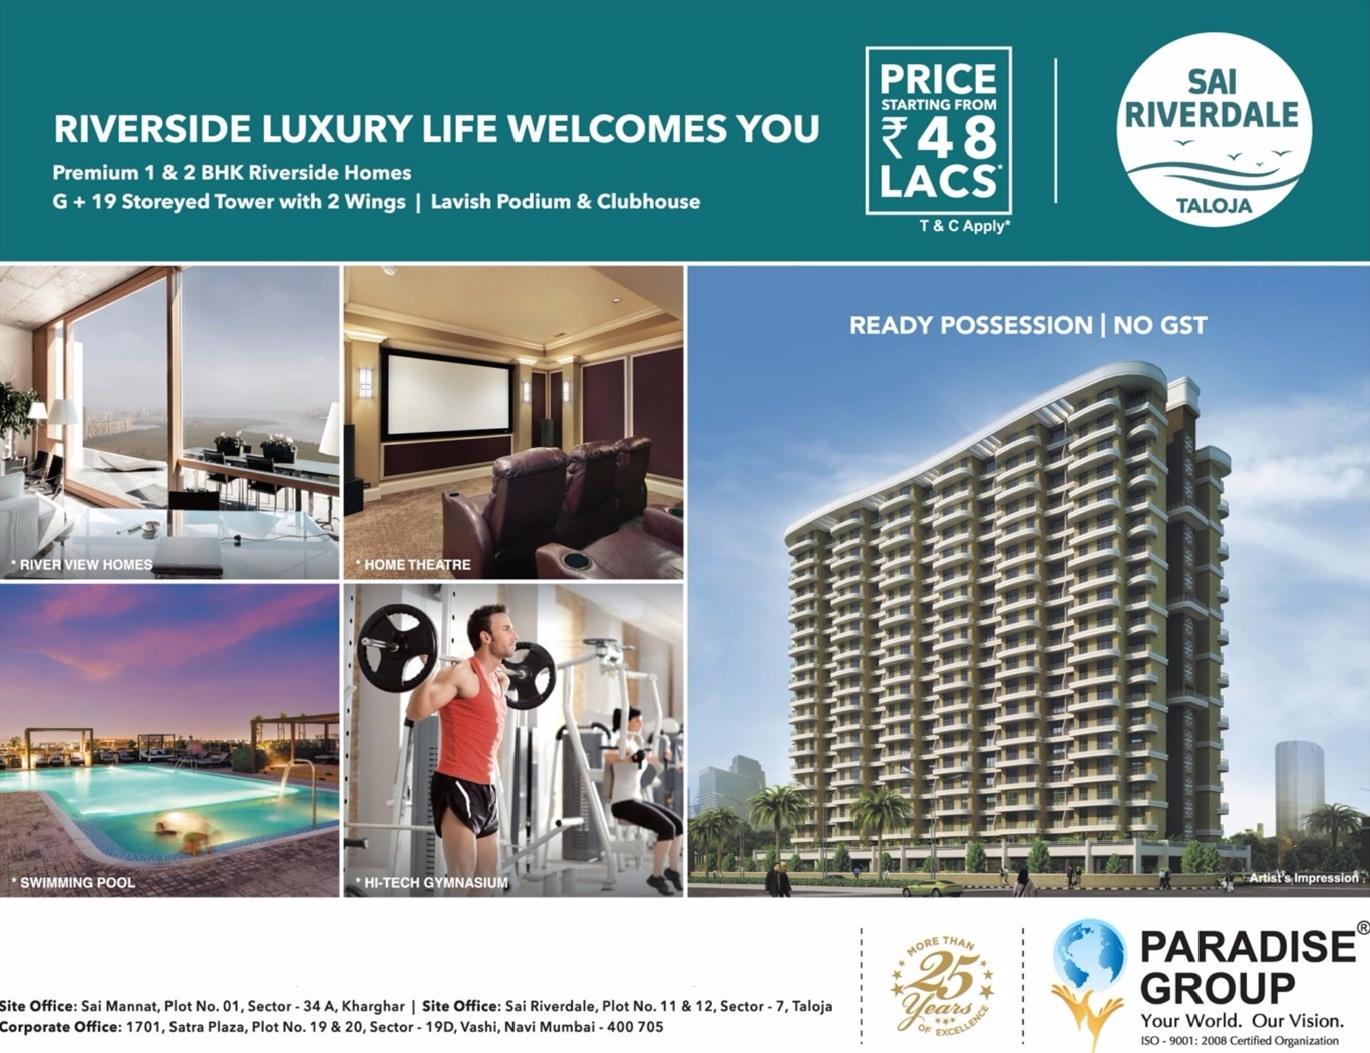 Riverside luxury life welcomes you at Paradise Sai Riverdale in Navi Mumbai Update